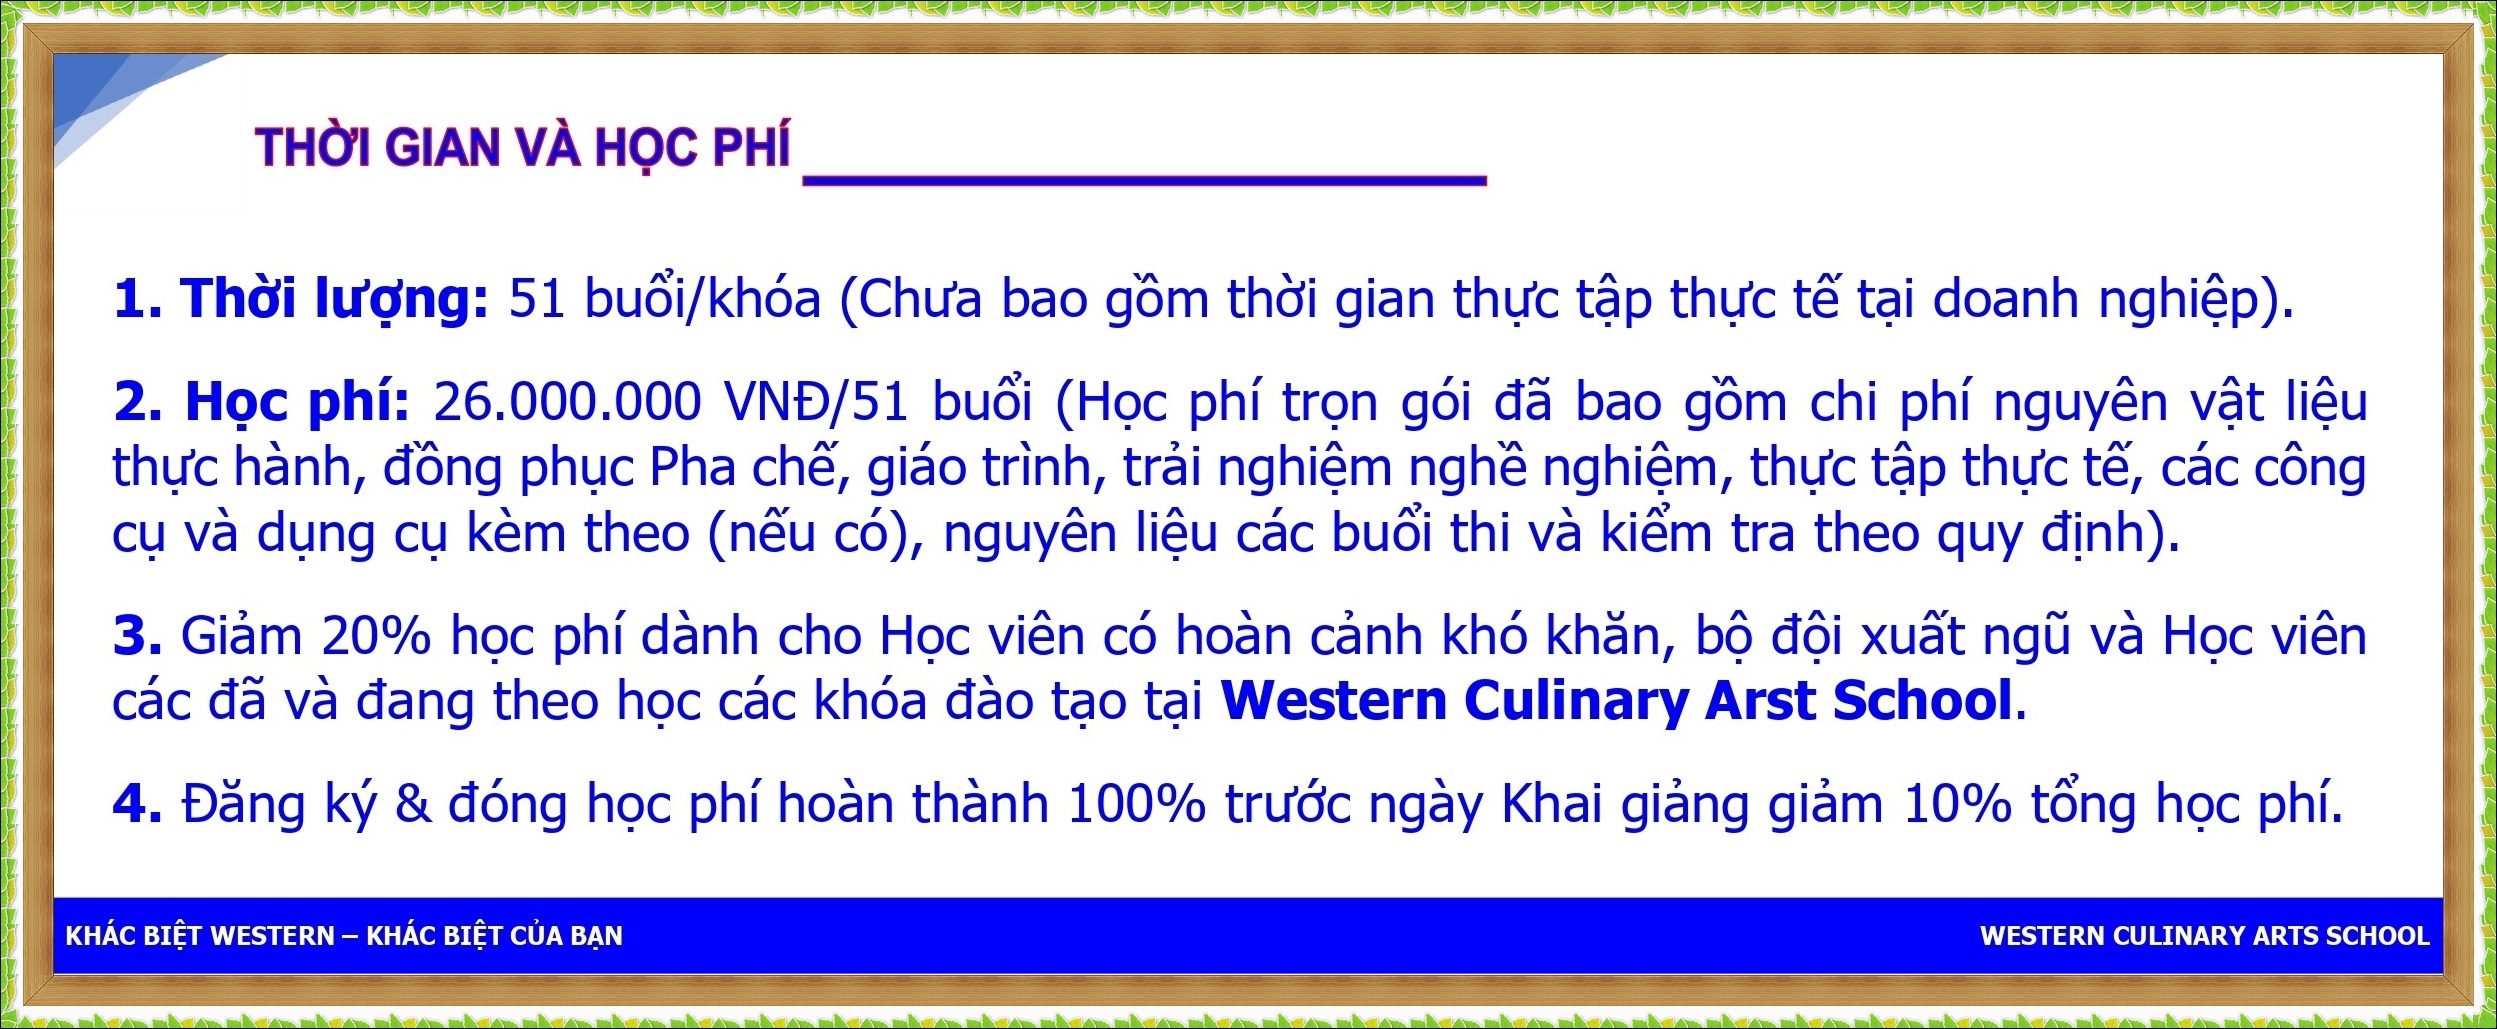 THOI GIAN VA HOC PHI BARTDH_page-0001